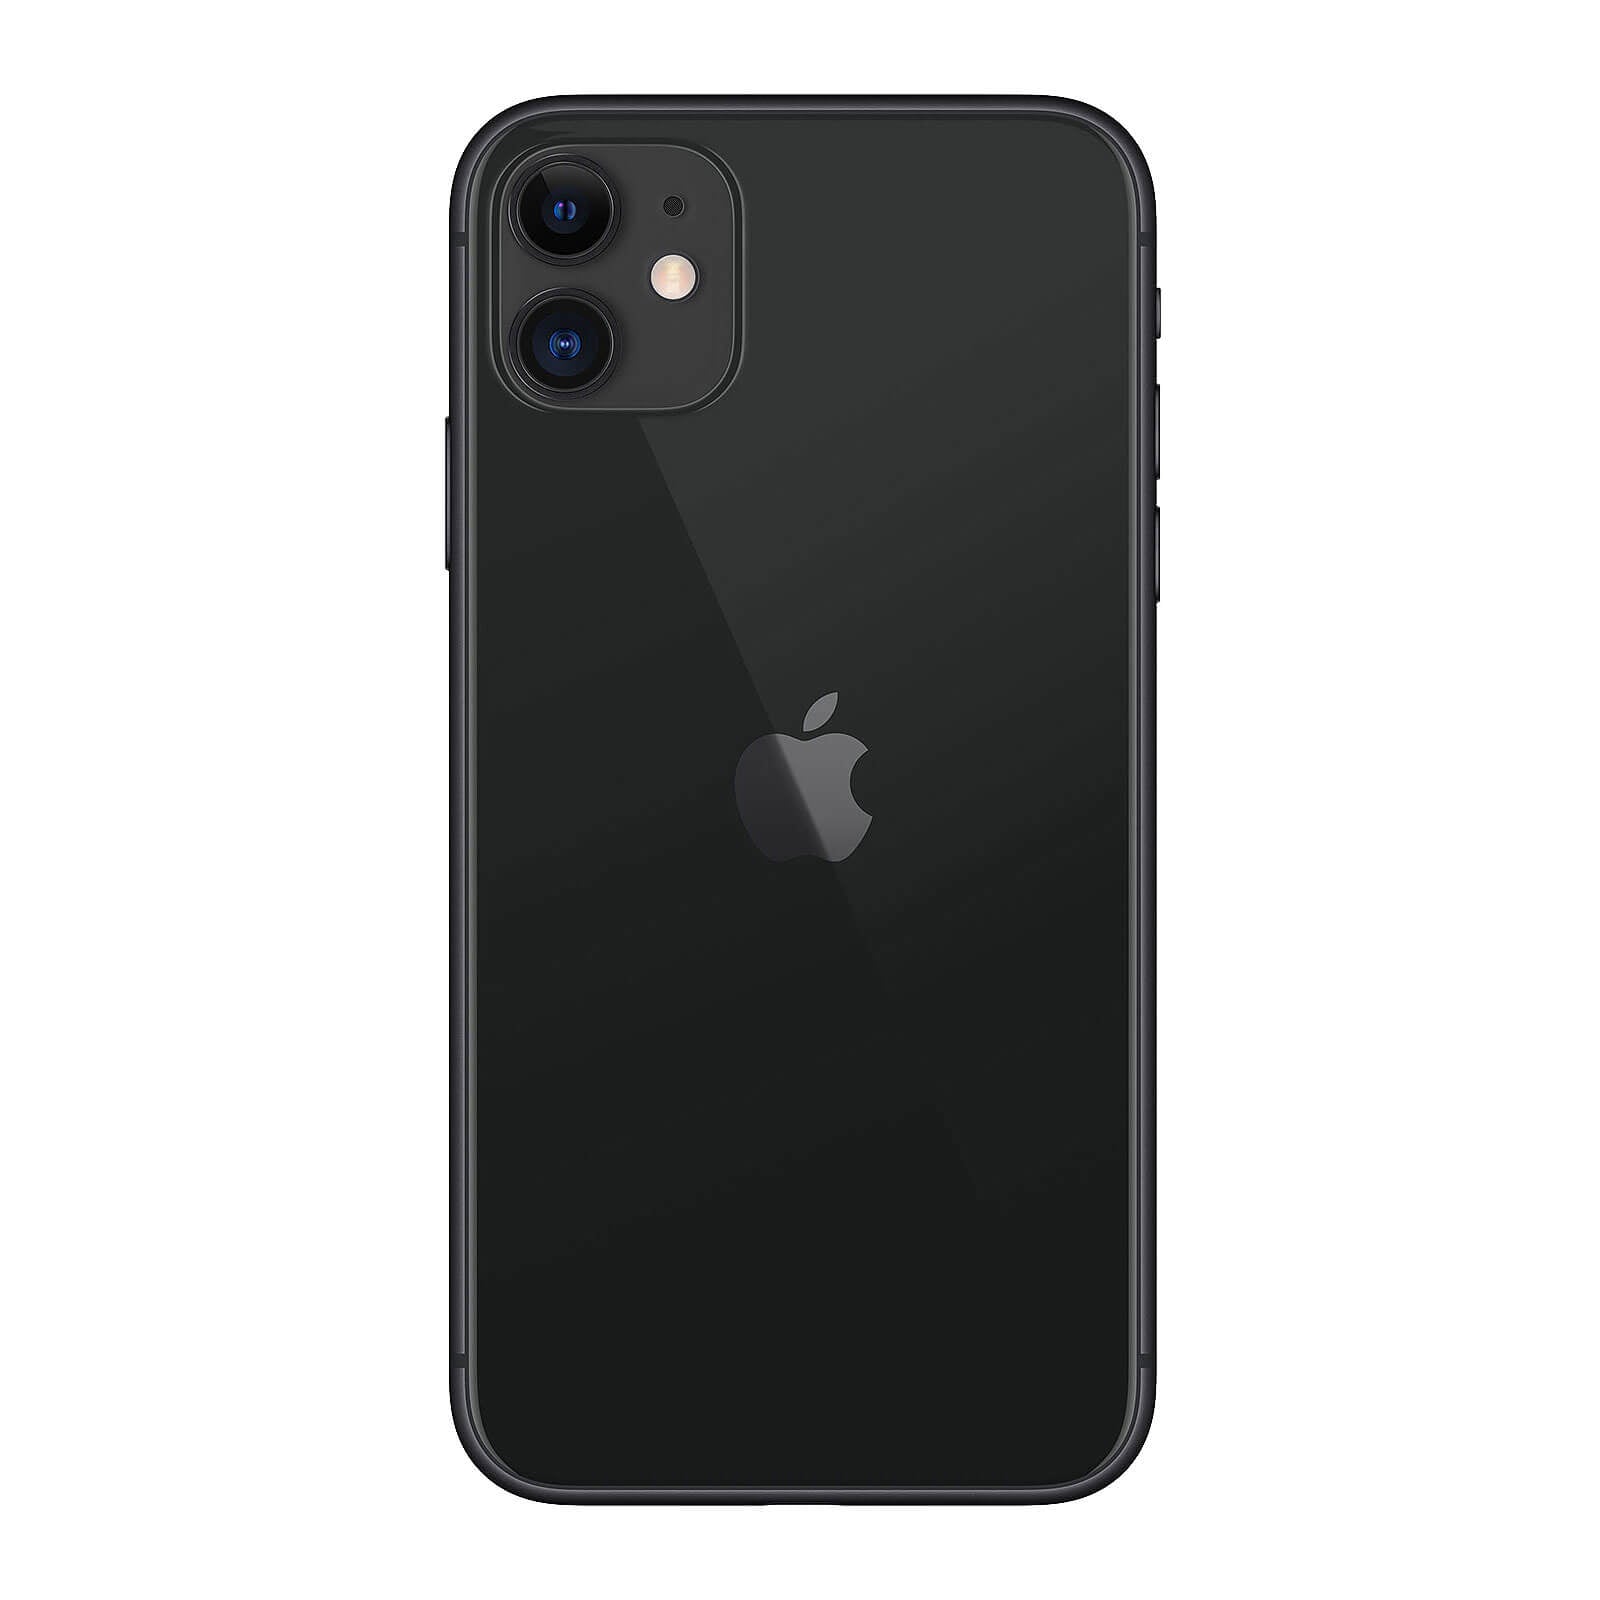 Apple iPhone 11 128GB Black Fair Unlocked – Loop Mobile - US